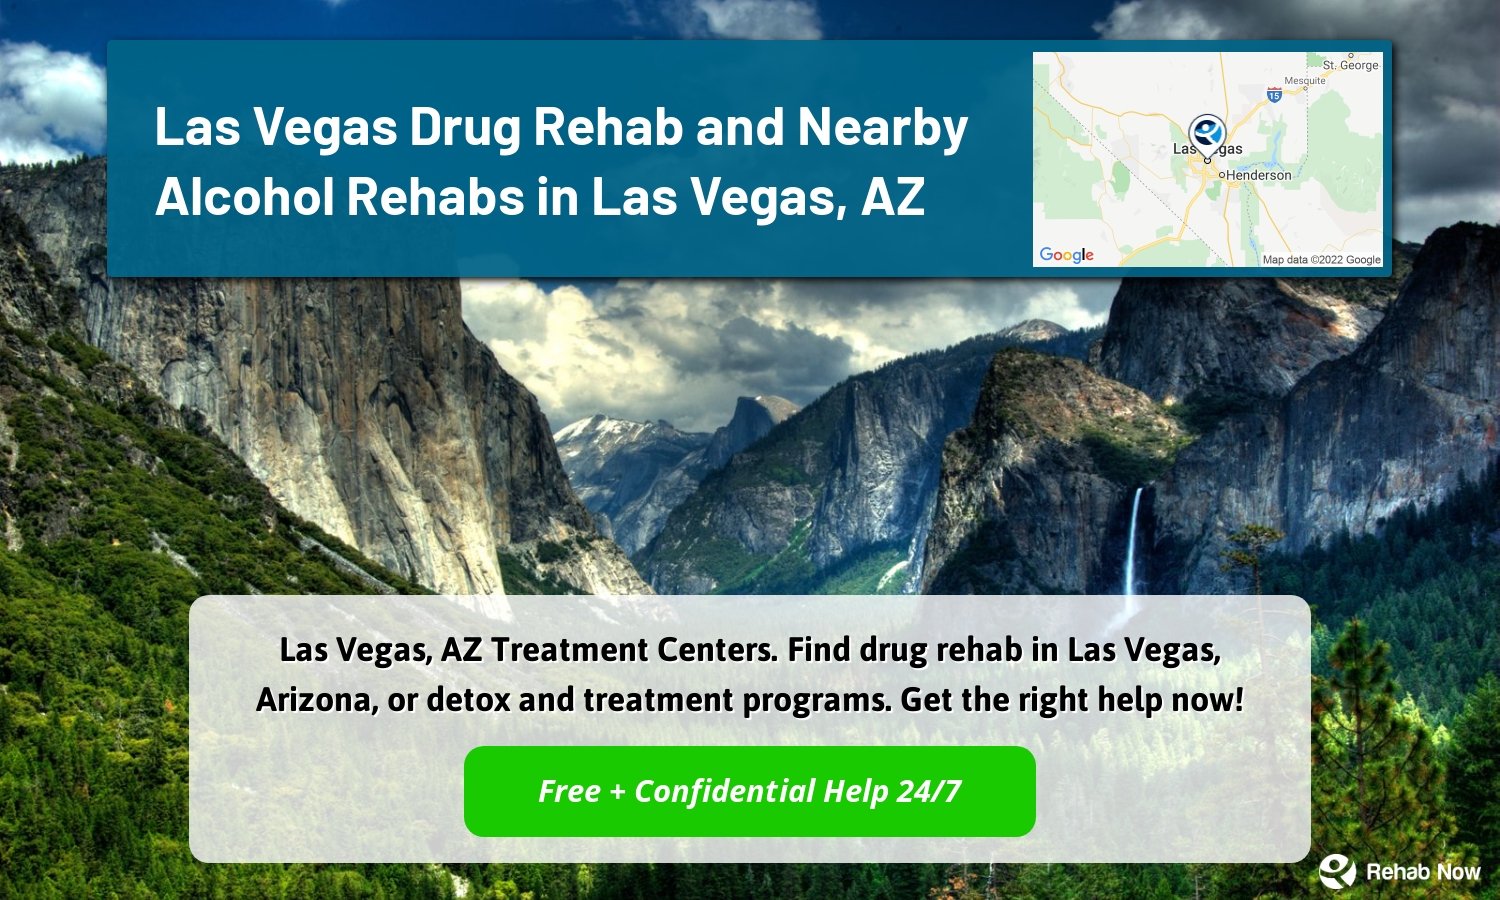 Las Vegas, AZ Treatment Centers. Find drug rehab in Las Vegas, Arizona, or detox and treatment programs. Get the right help now!